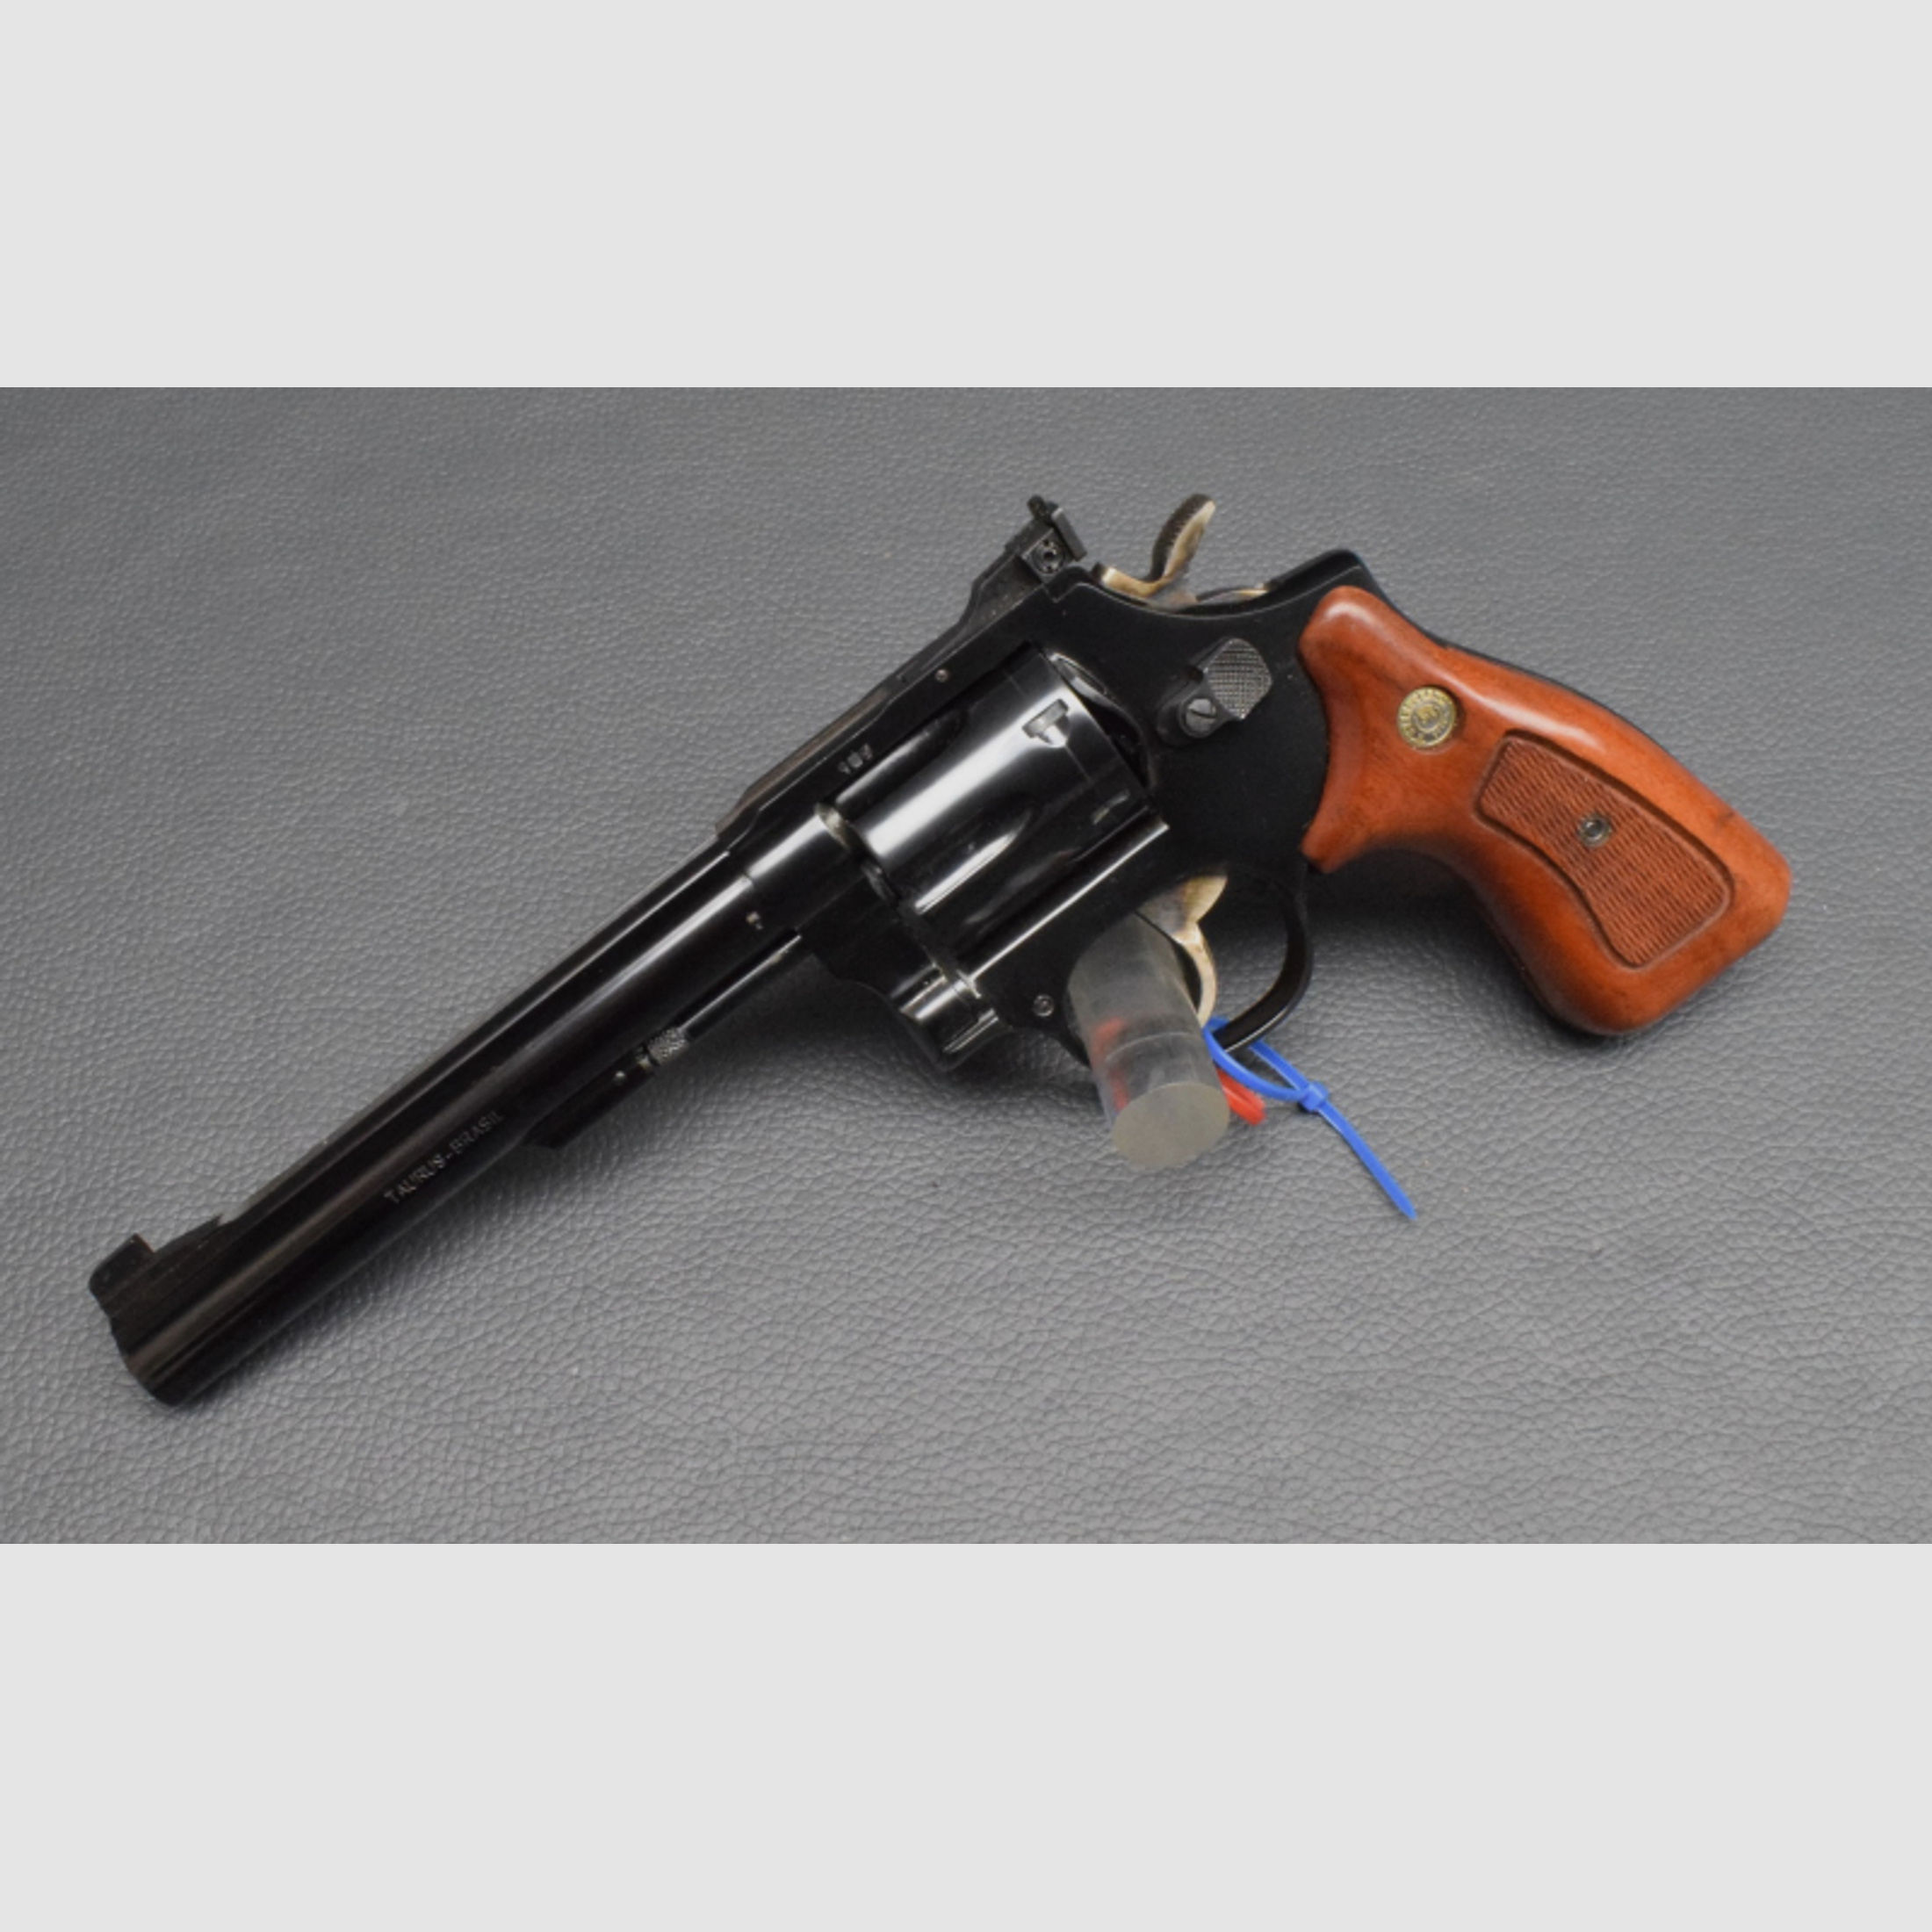 Taurus Revolver Modell 96, Kaliber 22lr, sehr gut